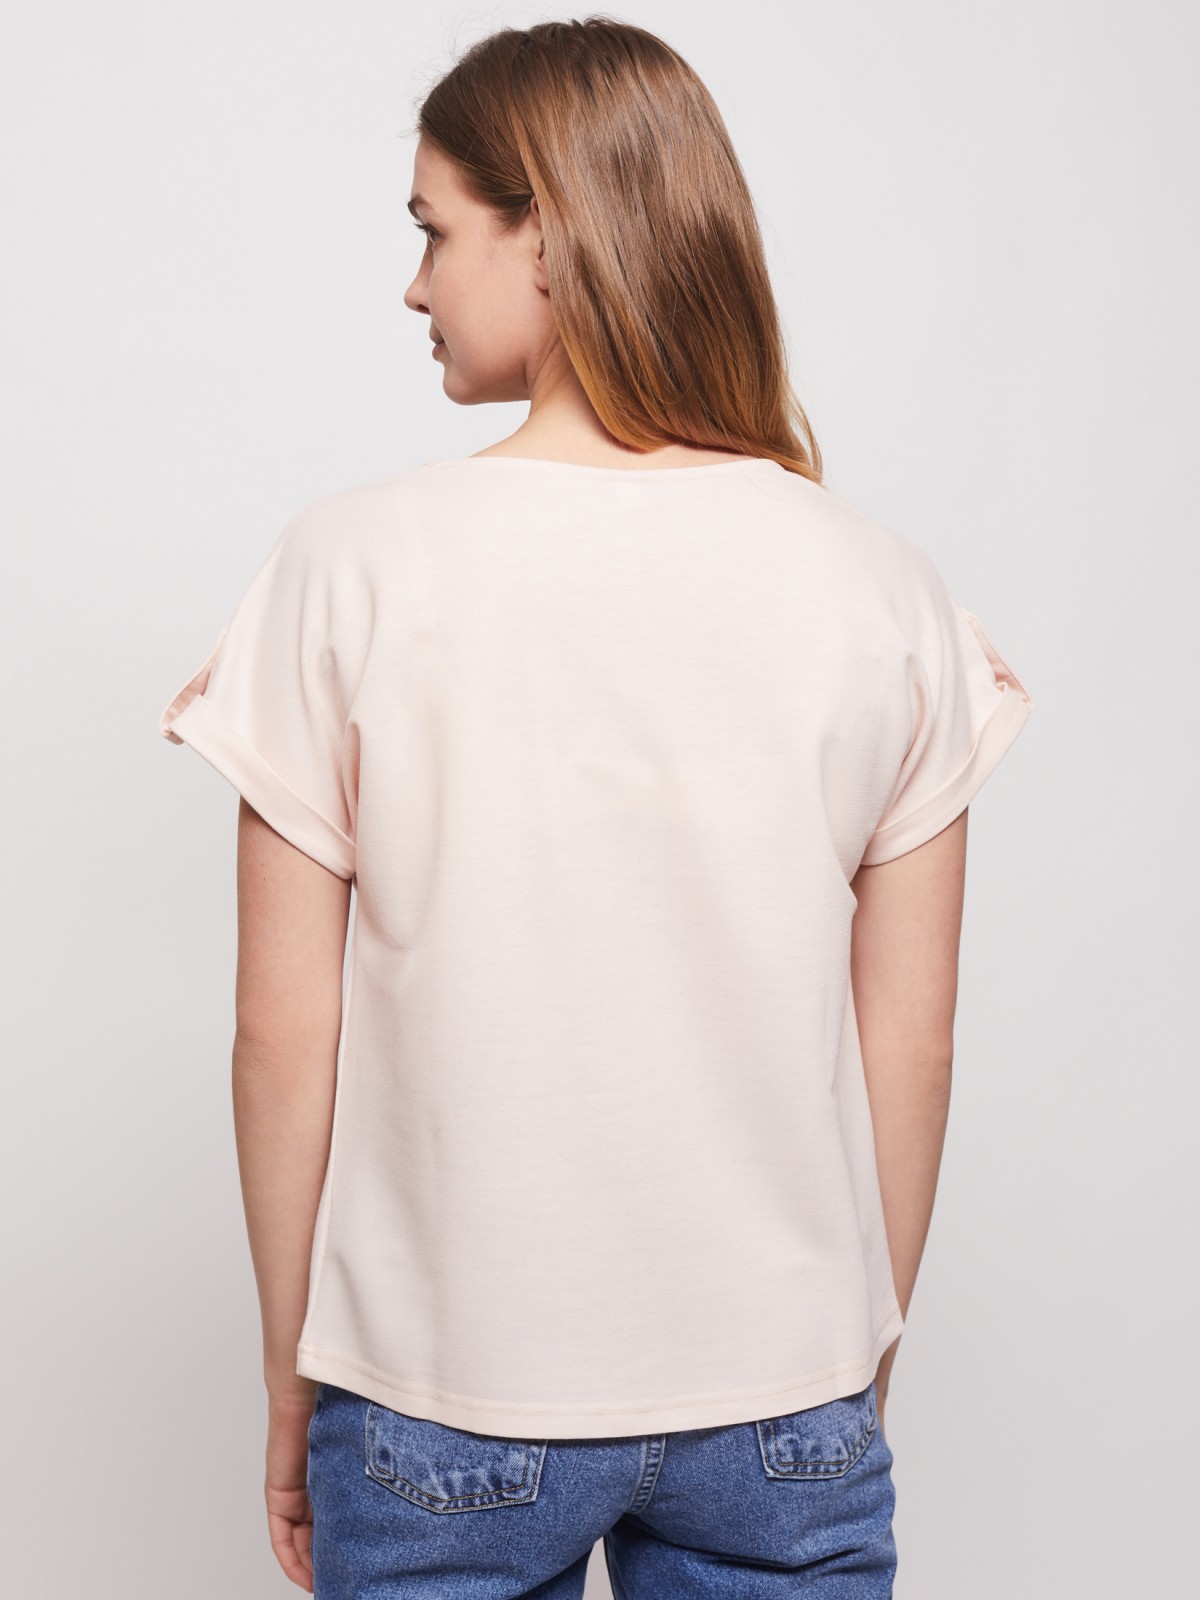 Блузка с короткими рукавами zolla 021213259011, цвет розовый, размер S - фото 3